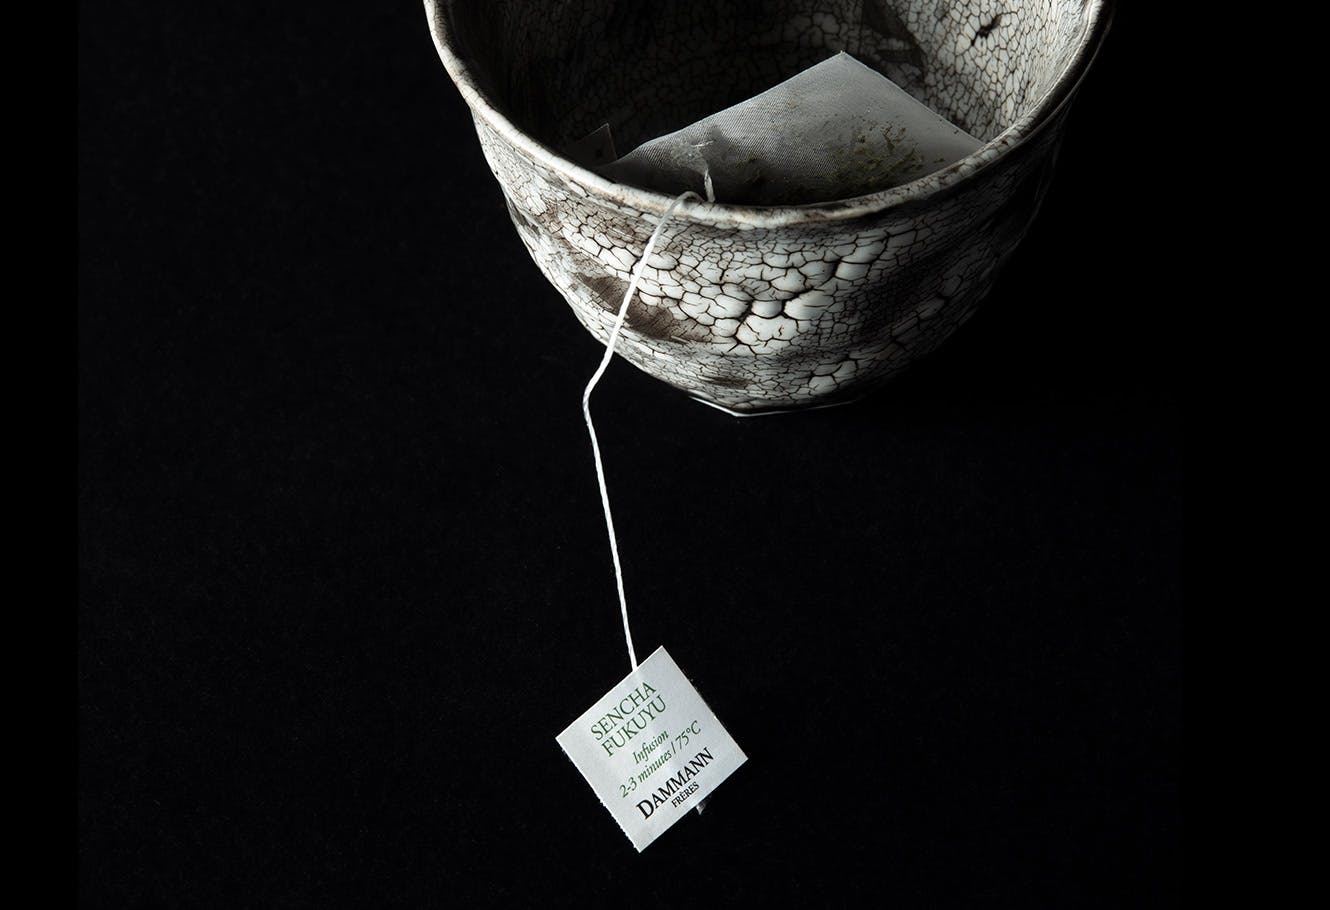 Japanese green tea bag "Sencha Fukuyu" in a cup of tea.